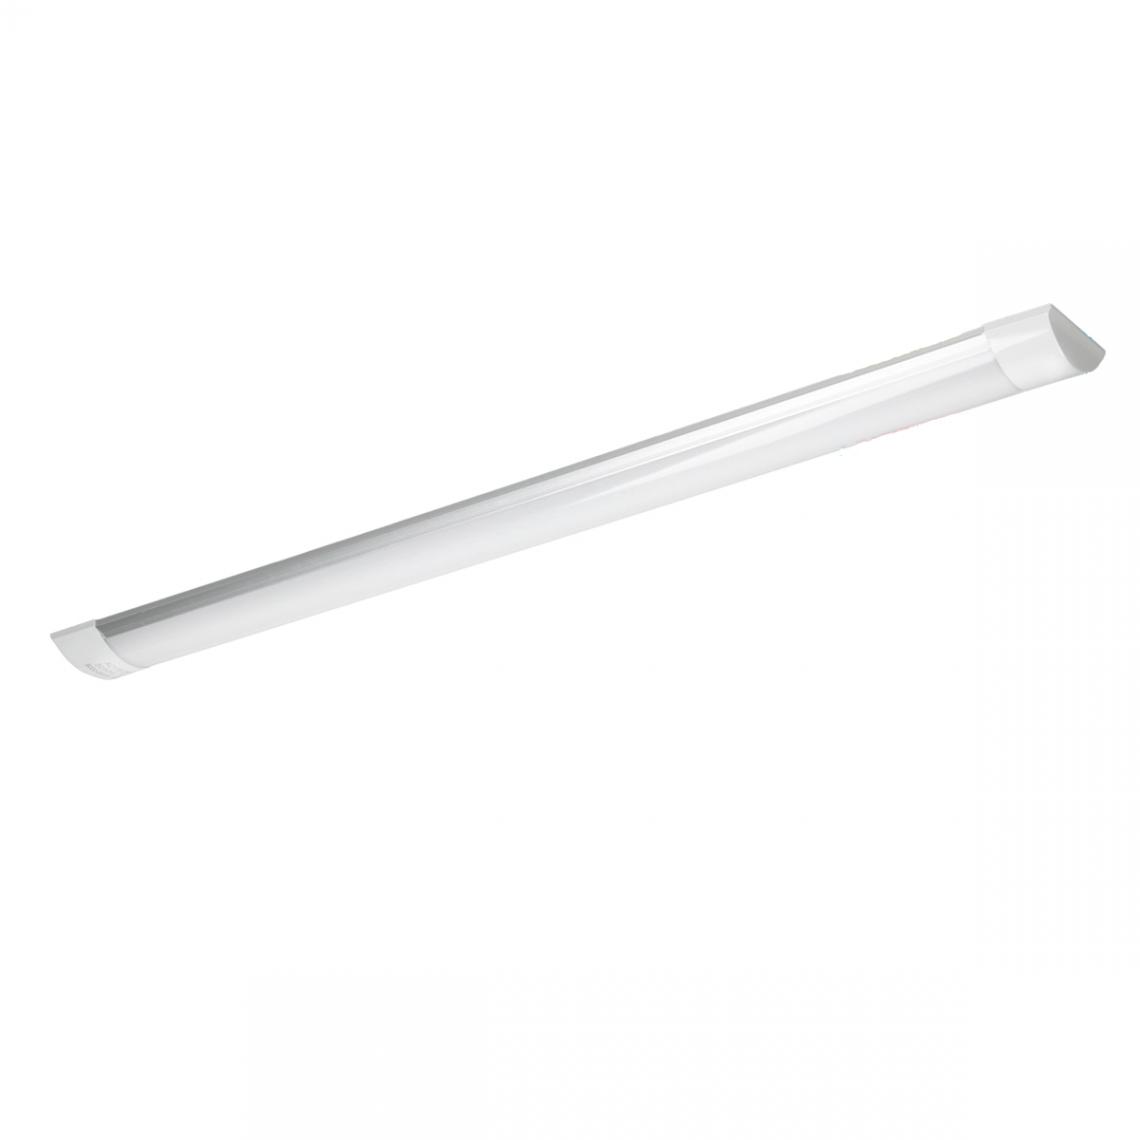 Ecd Germany - Set 2x LED batten tube 28W 90cm blanc froid surface luminaire slim barre plafond - Tubes et néons